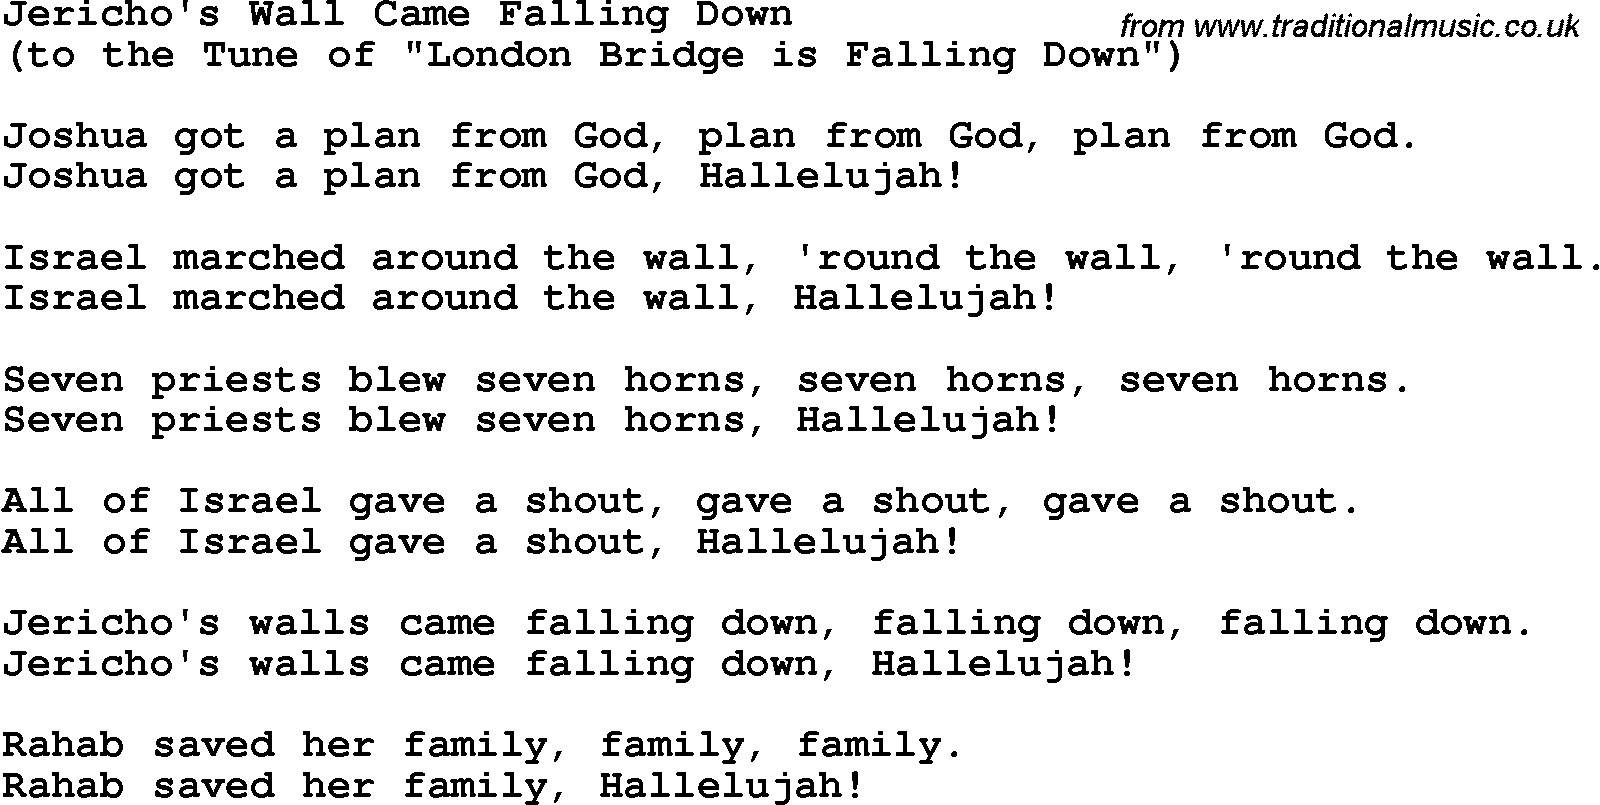 Christian Chlidrens Song Jericho's Wall Came Falling Down Lyrics